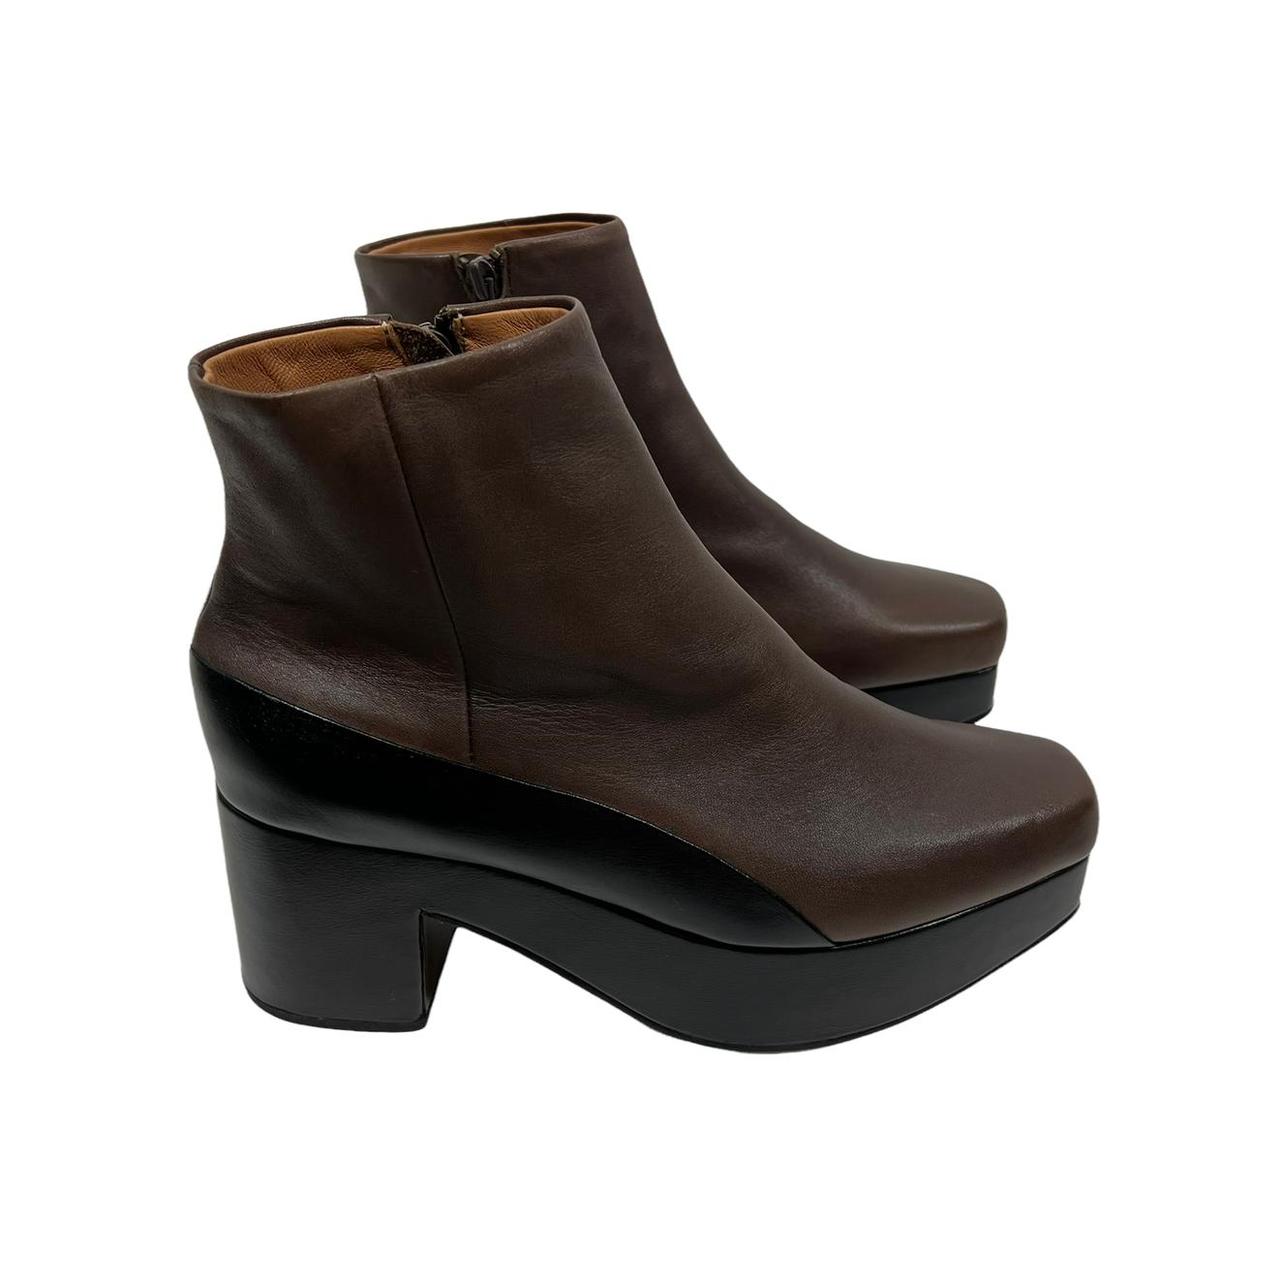 Rachel Comey Women's Brown and Black Boots (2)